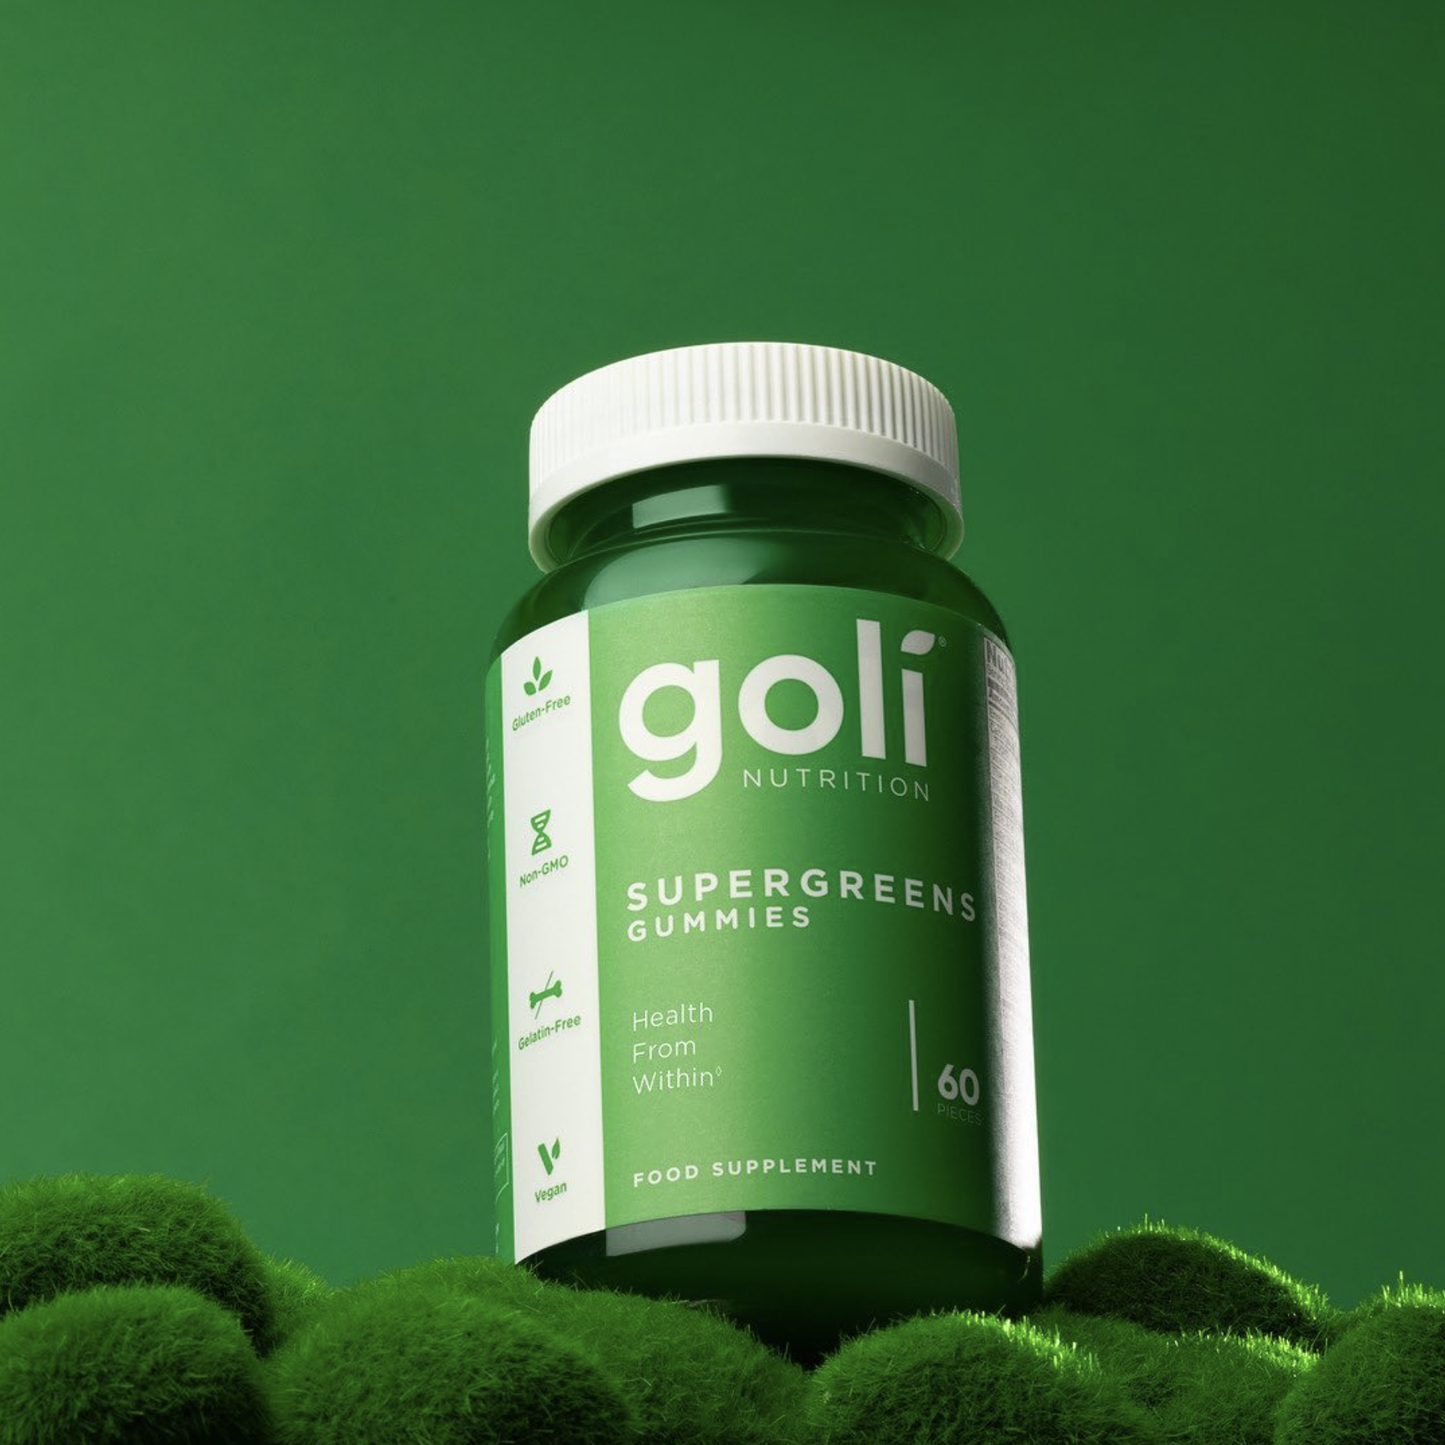 Goli Nutrition Gummies 60 Pieces, Supergreens